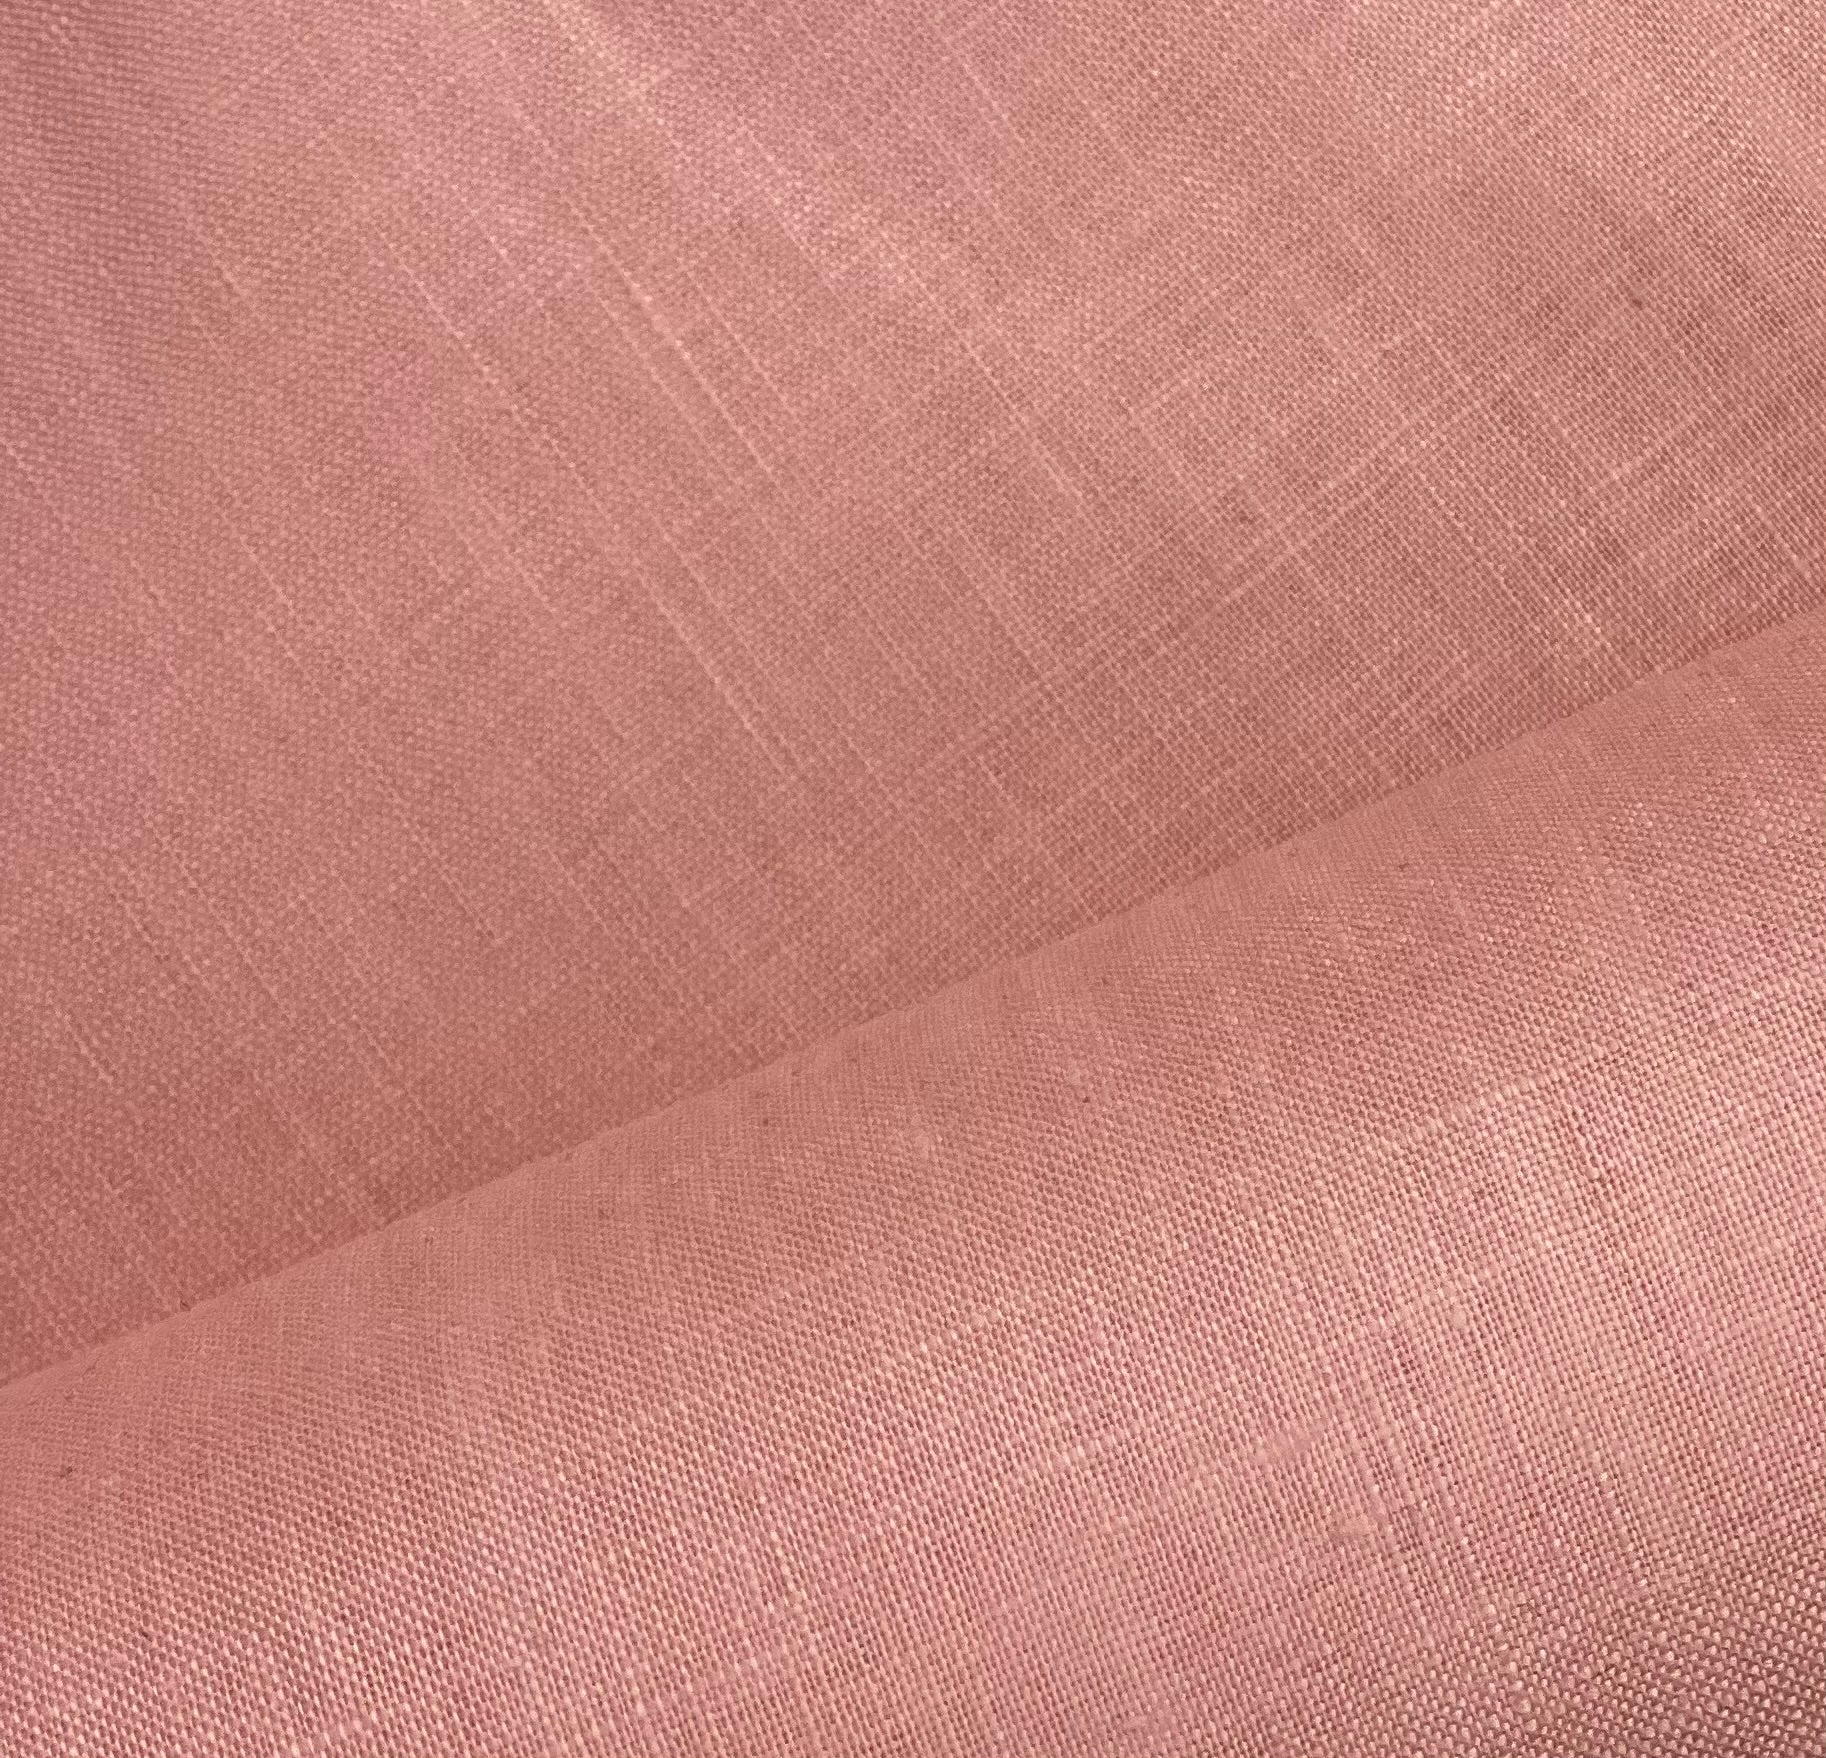 American Linen, Salmon Pink